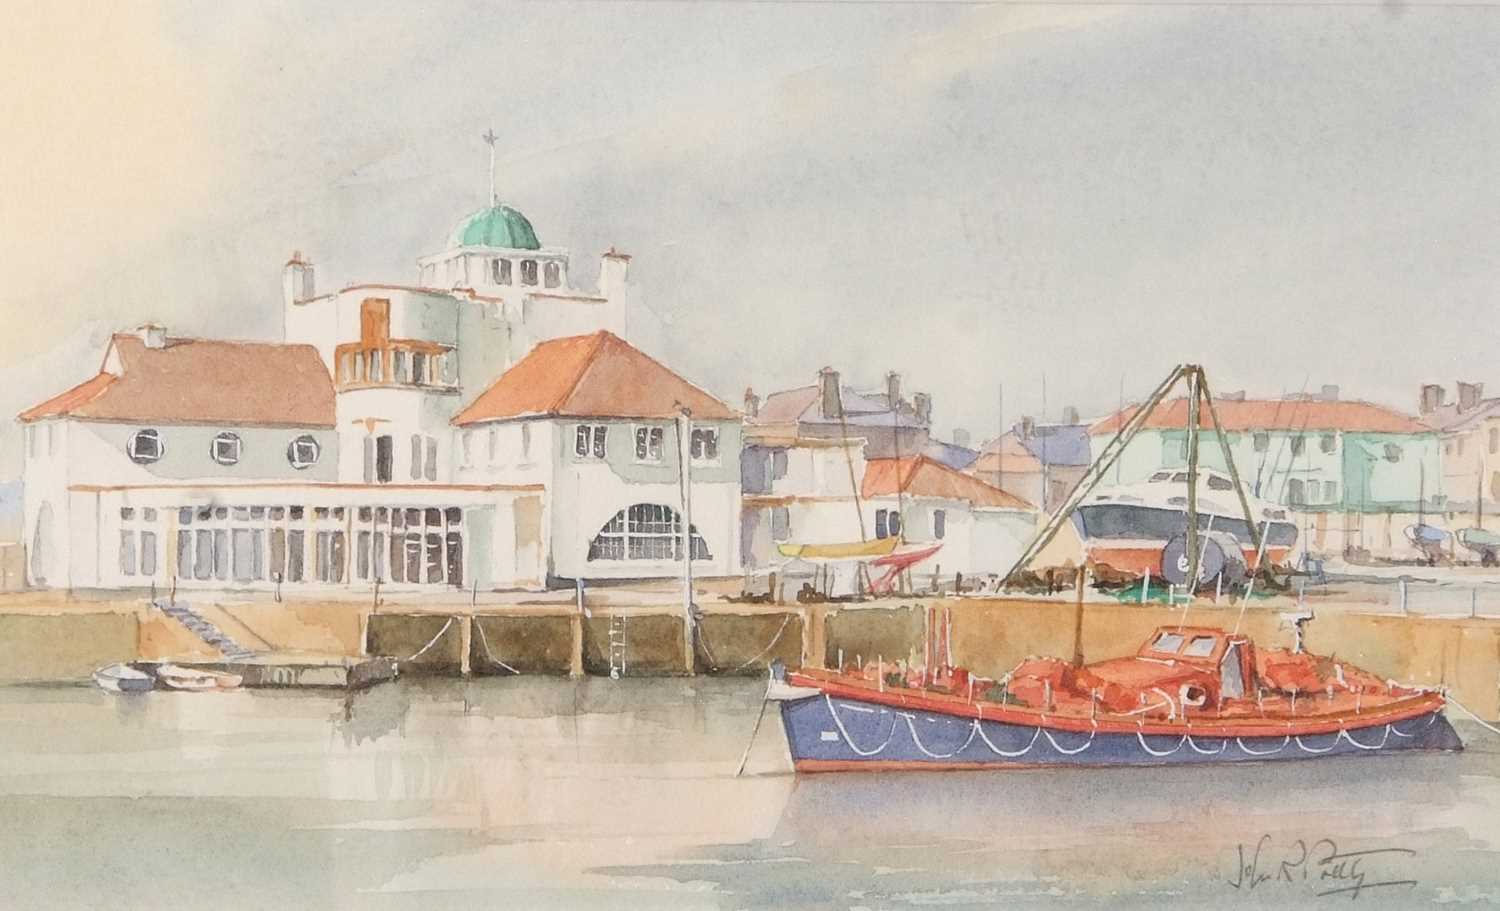 John R. Pretty (British, 20th century), Lowestoft Marina, watercolour, signed, 15x25cm, framed and